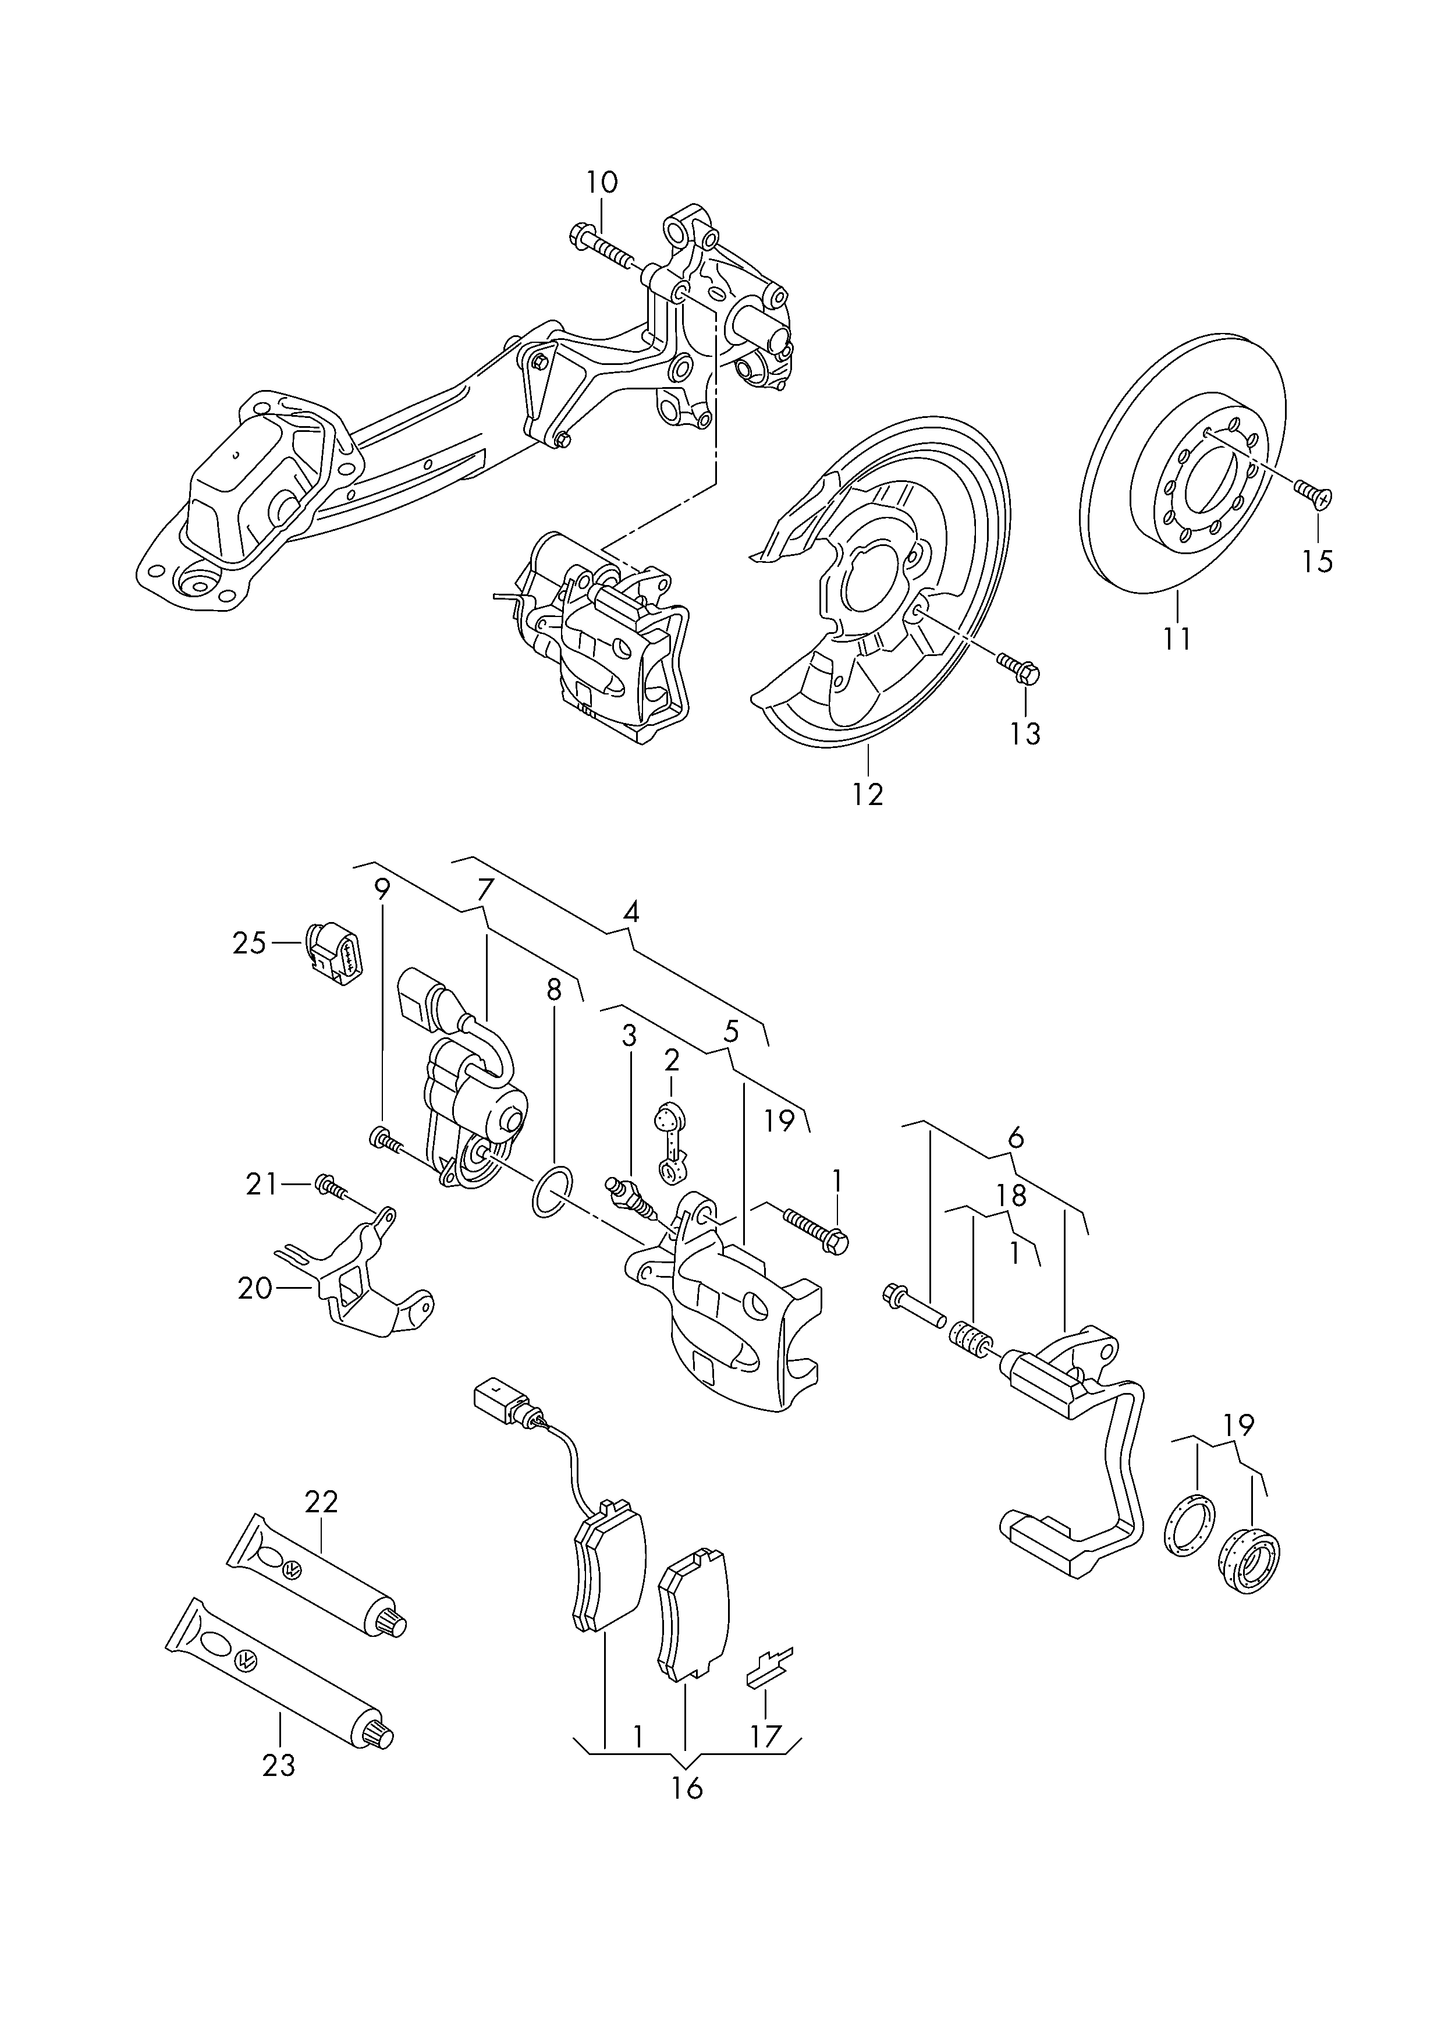 (16) 112168 MEYLE Rear Brake Pad Set w/o sensors Various VAG 04>